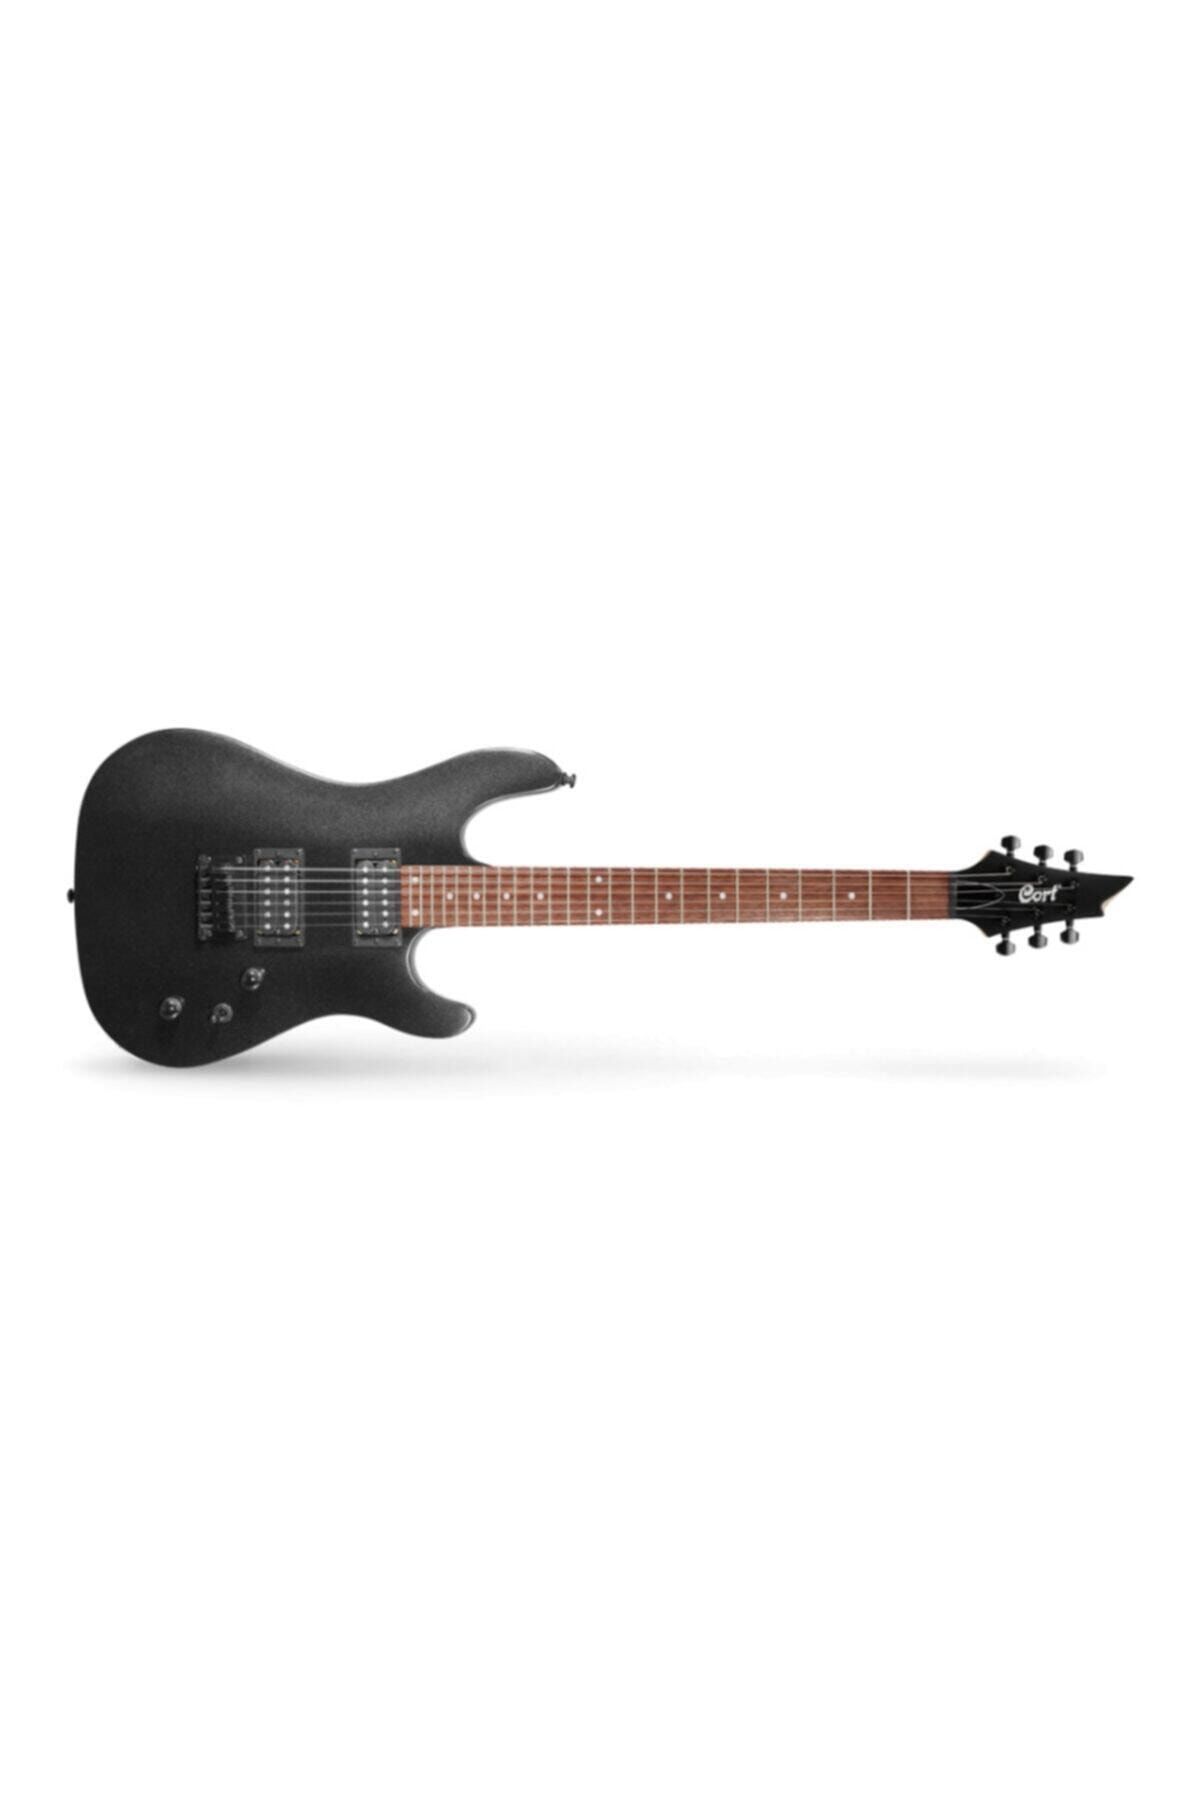 Cort Kx100bk Elektro Gitar, Black Metalıc, (H-H), Eg4 Power